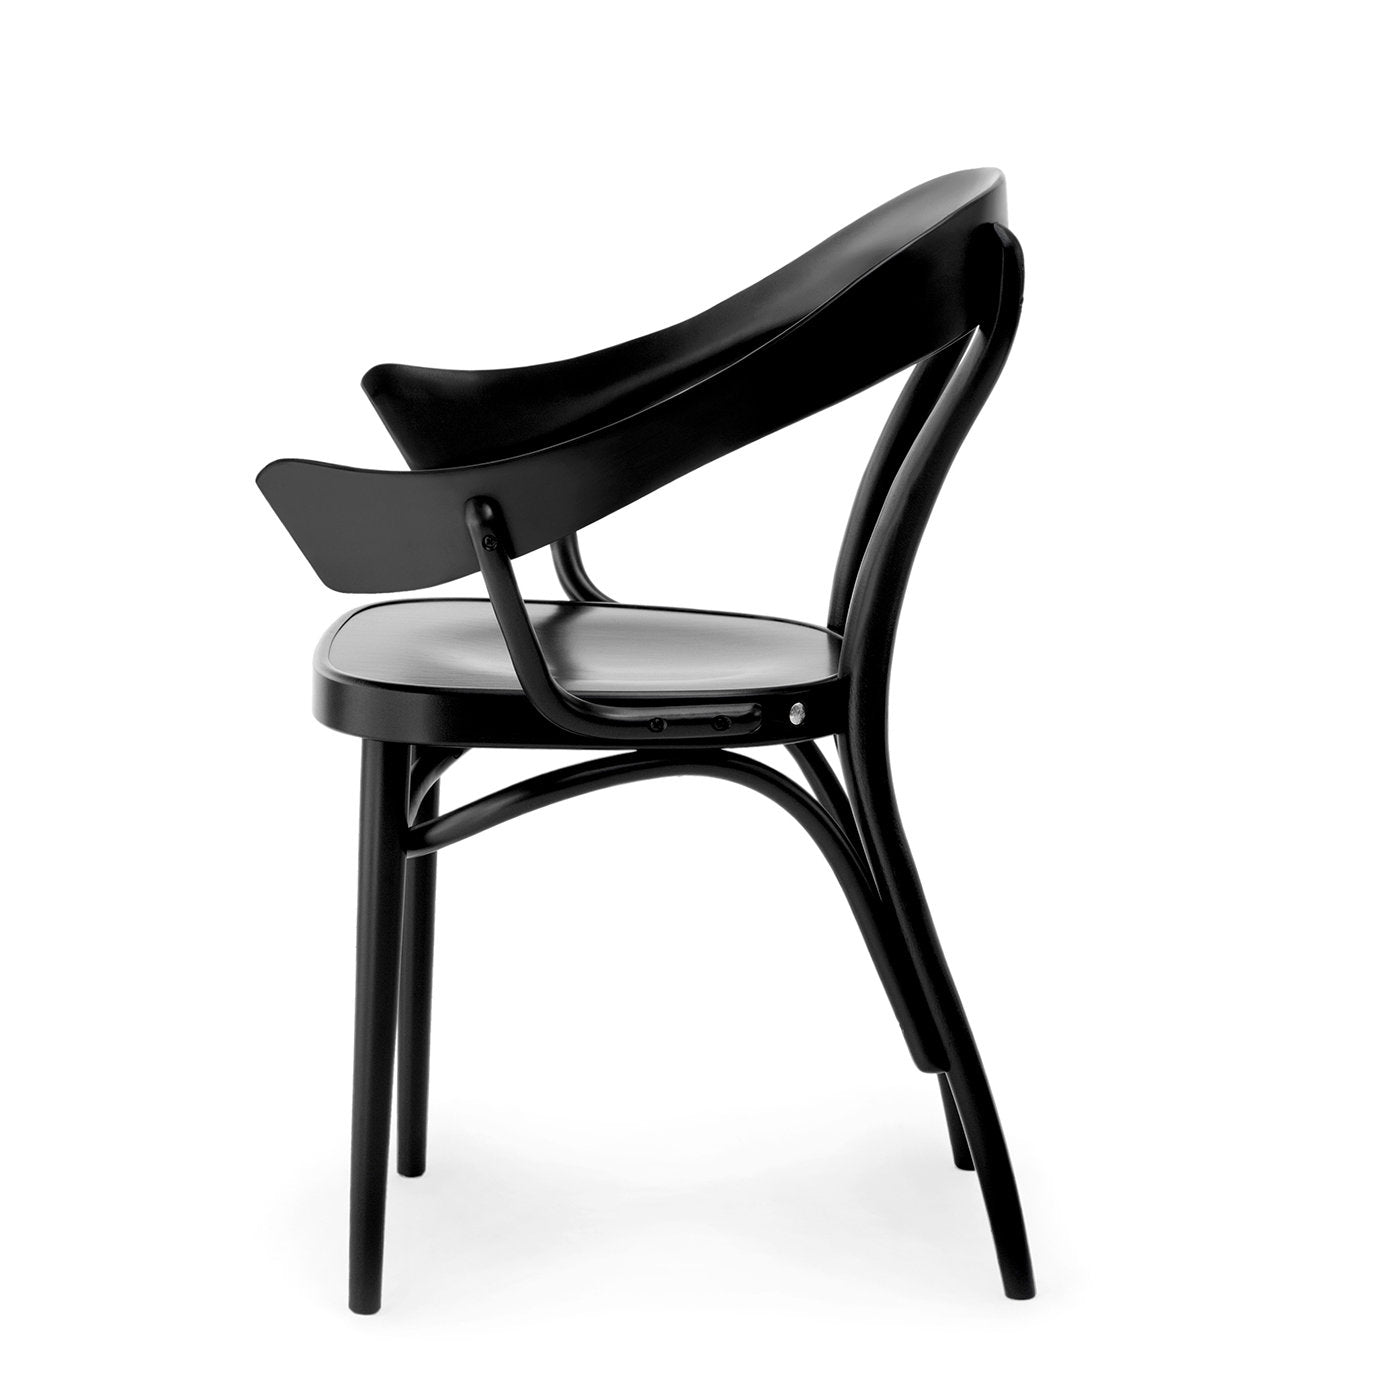 Bistrotstuhl Chair by Nigel Coates - Alternative view 1